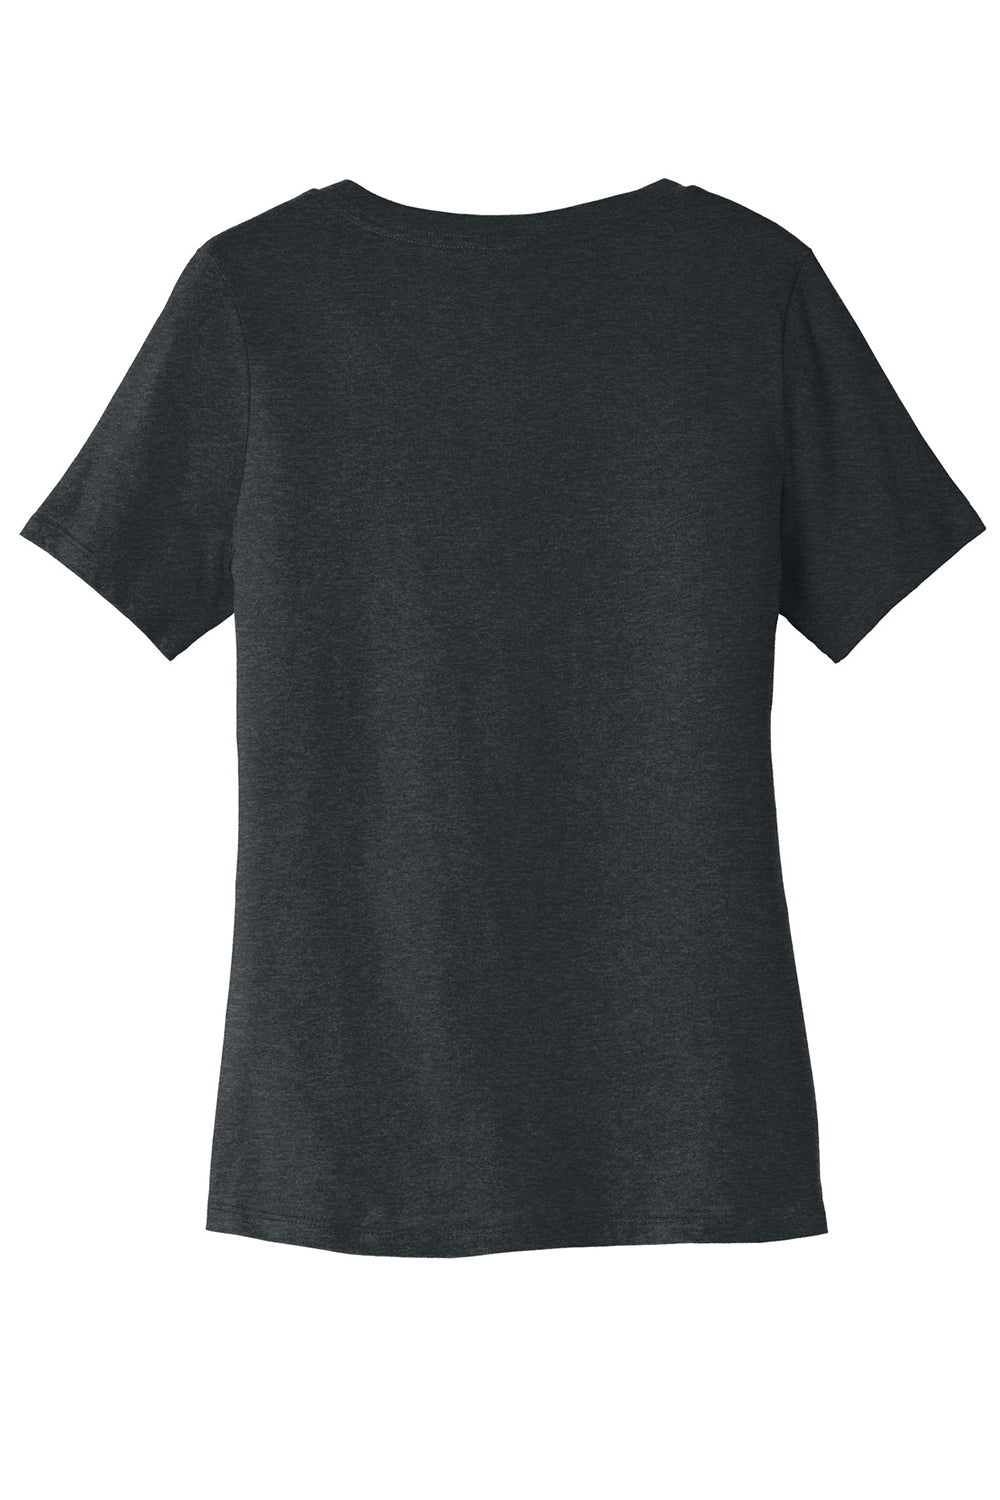 Bella + Canvas BC6405CVC Womens CVC Short Sleeve V-Neck T-Shirt Heather Dark Grey Flat Back